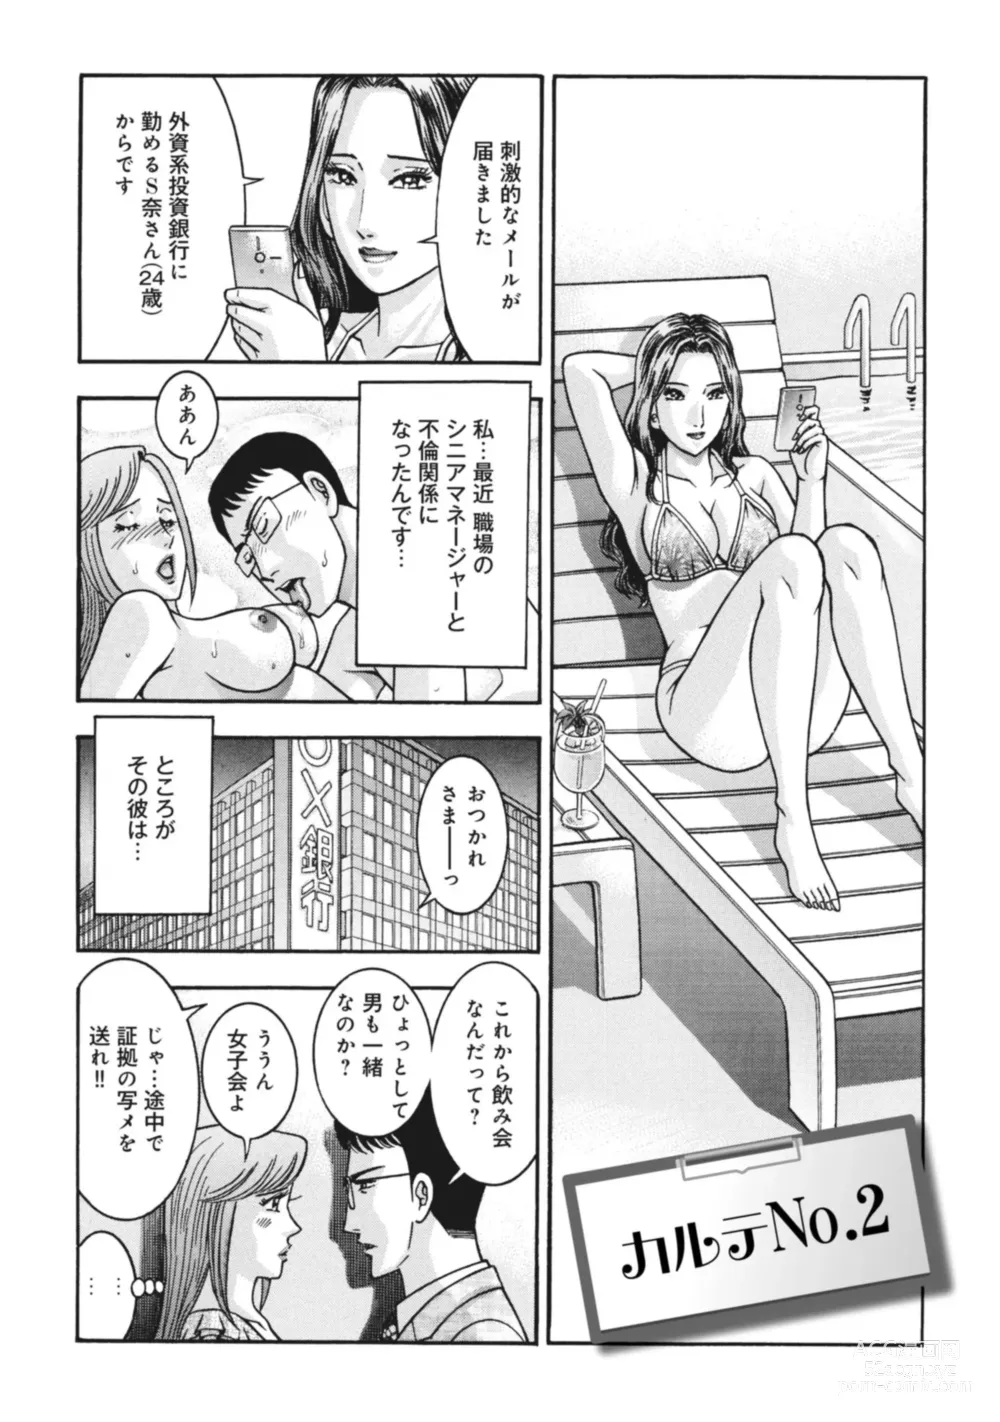 Page 10 of manga Renai Kaunserā Maki no Teisō Fairu 1